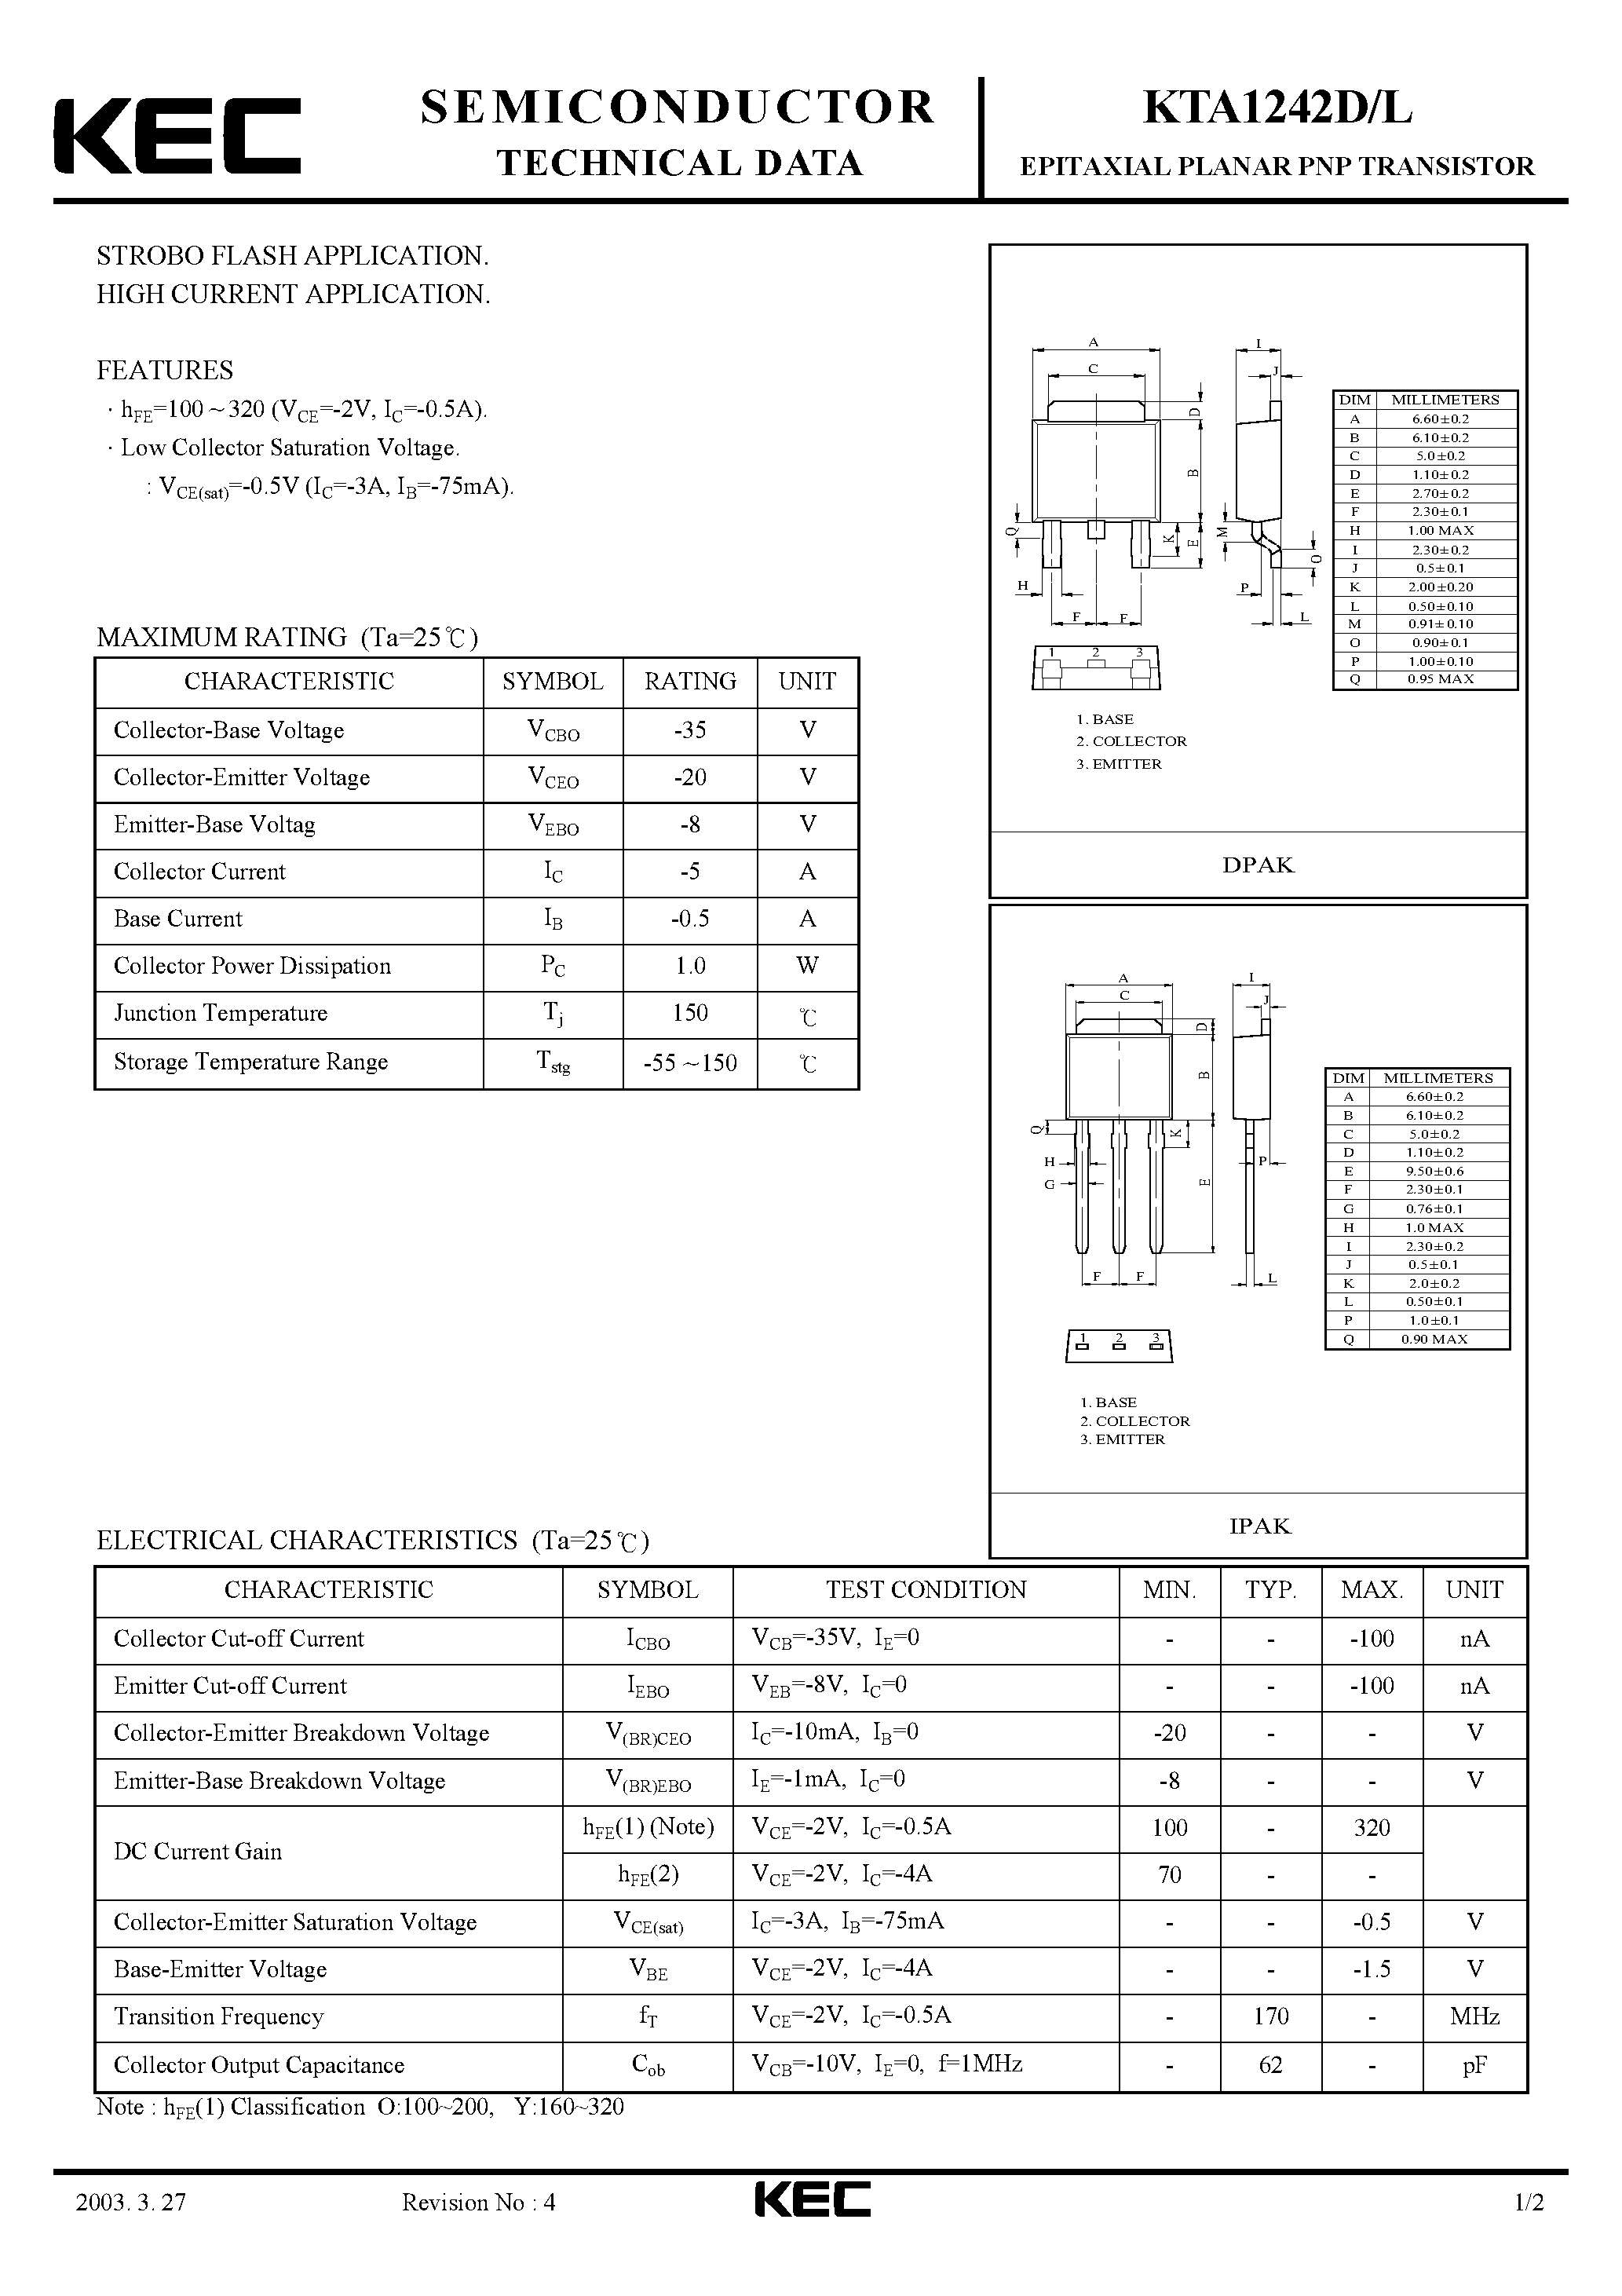 Даташит KTA1242D - EPITAXIAL PLANAR PNP TRANSISTOR (STROBO FLASH/ HIGH CURRENT) страница 1